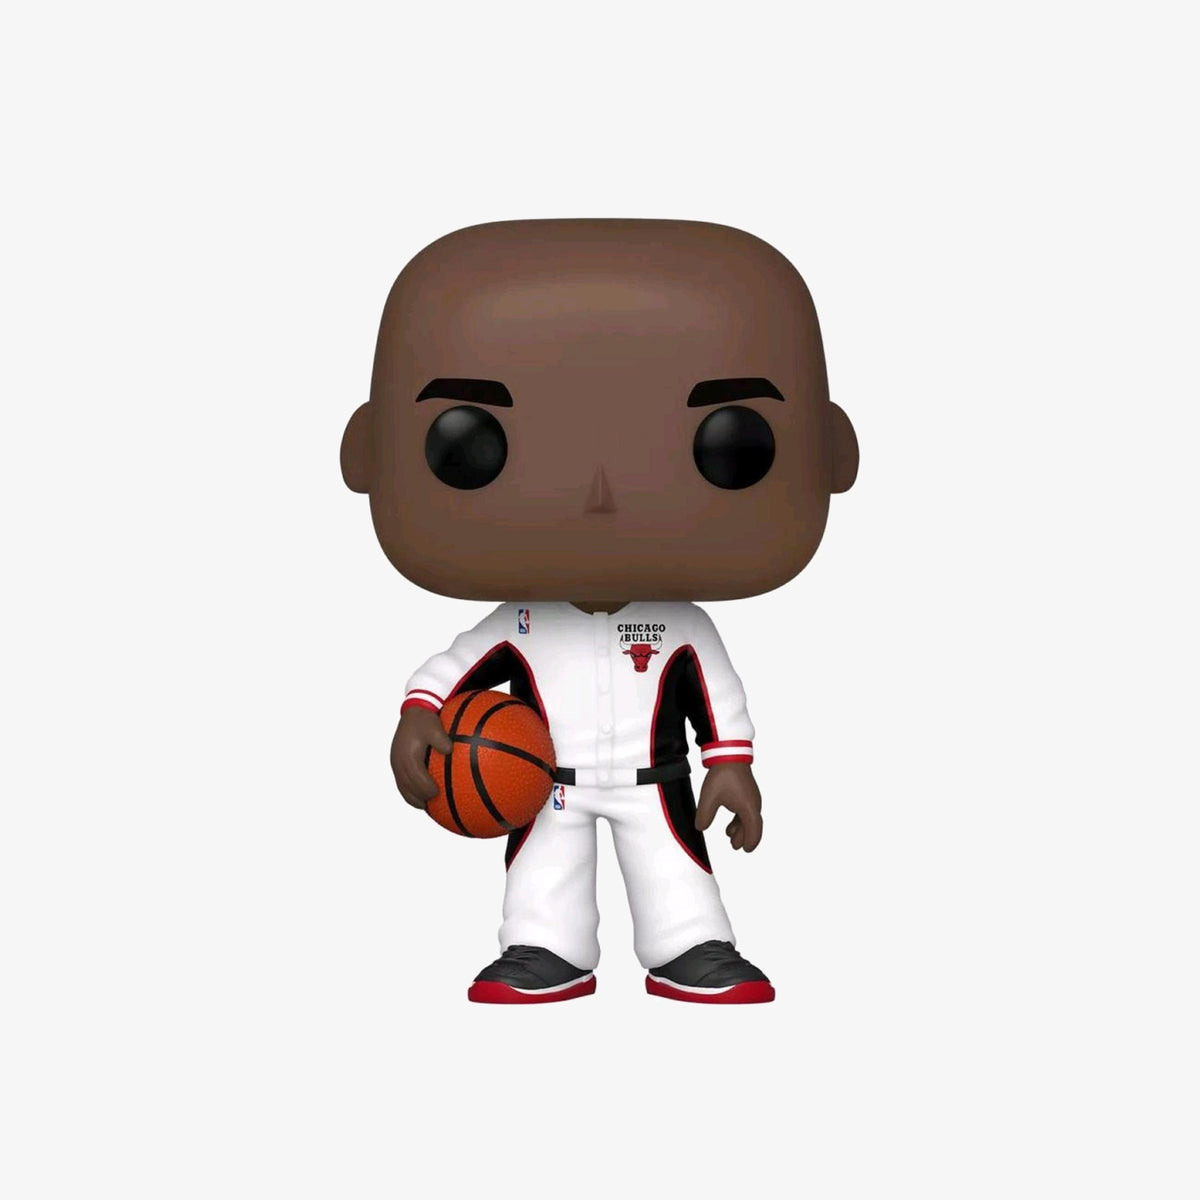 Michael Jordan “Warm Ups” Chicago Bulls NBA Pop Figure - White